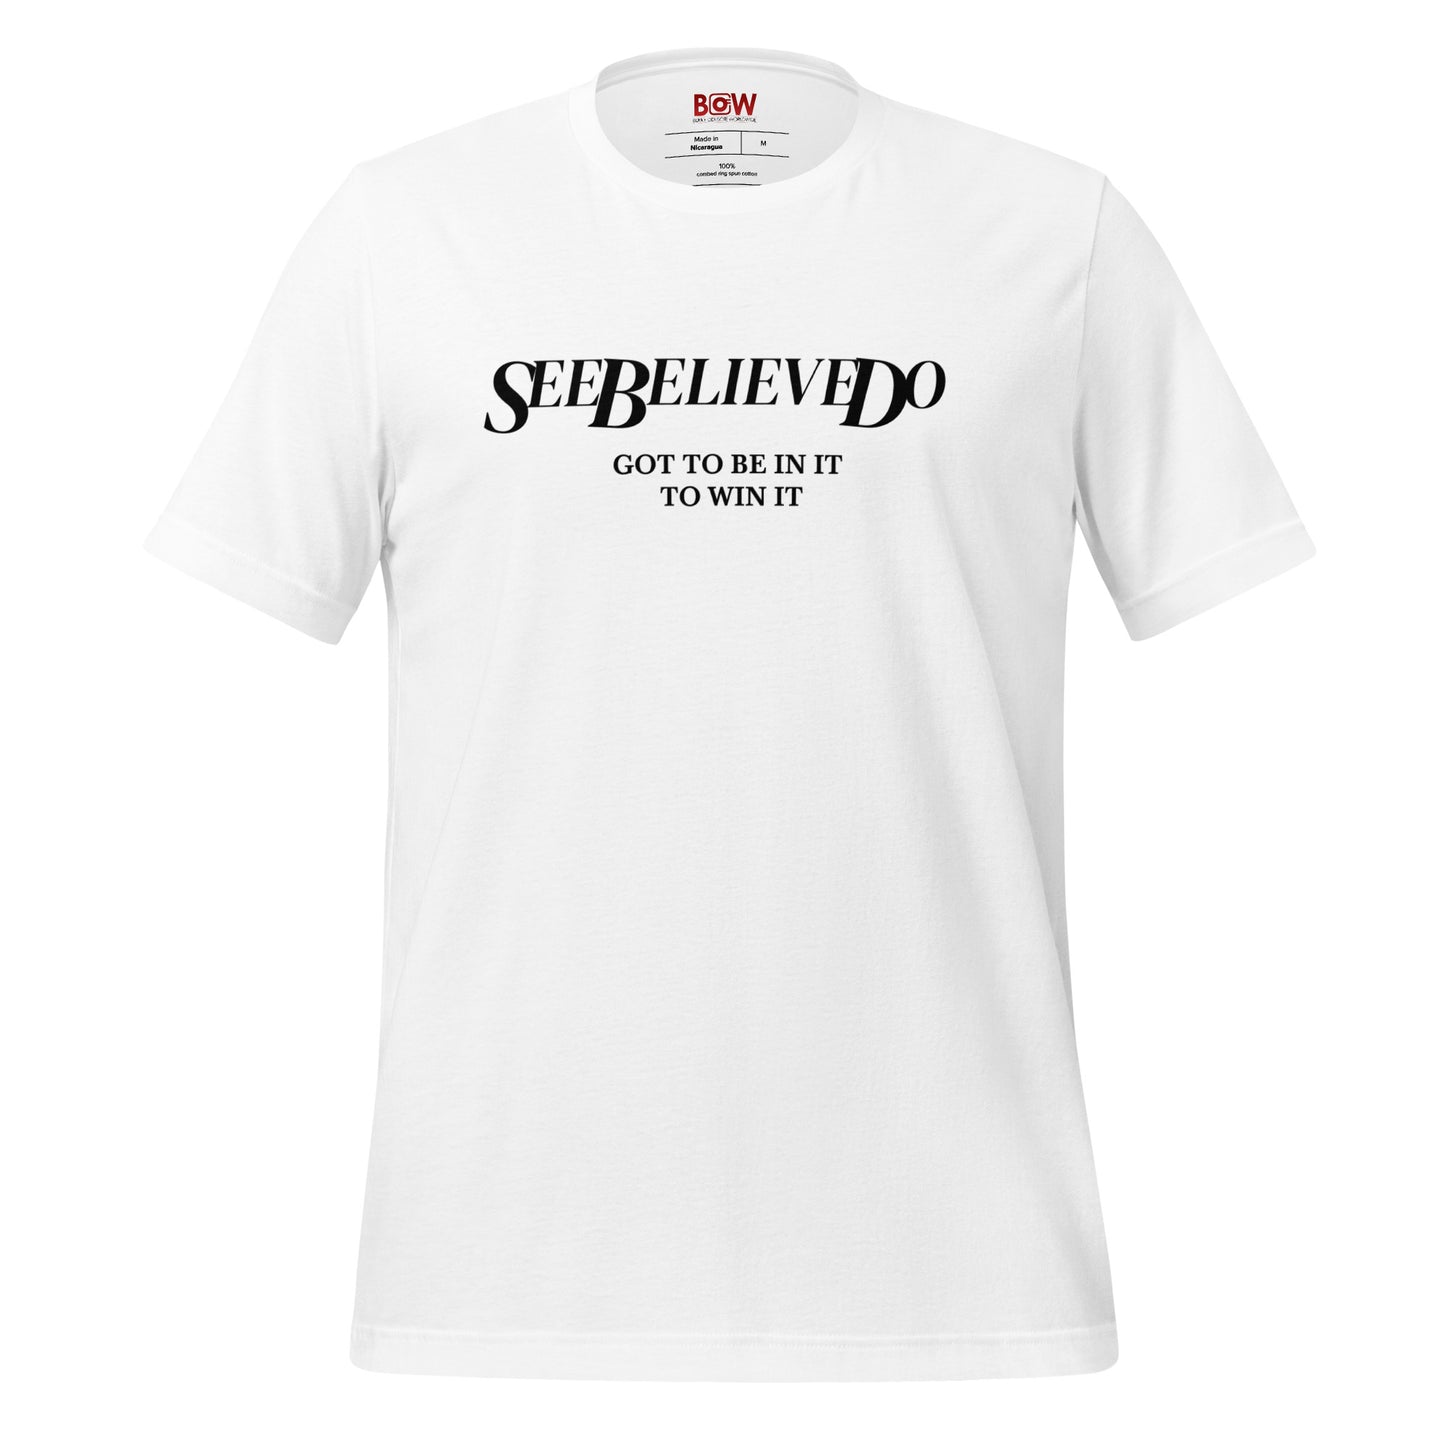 See Believe Do Short-Sleeve Slogan Unisex T-Shirt